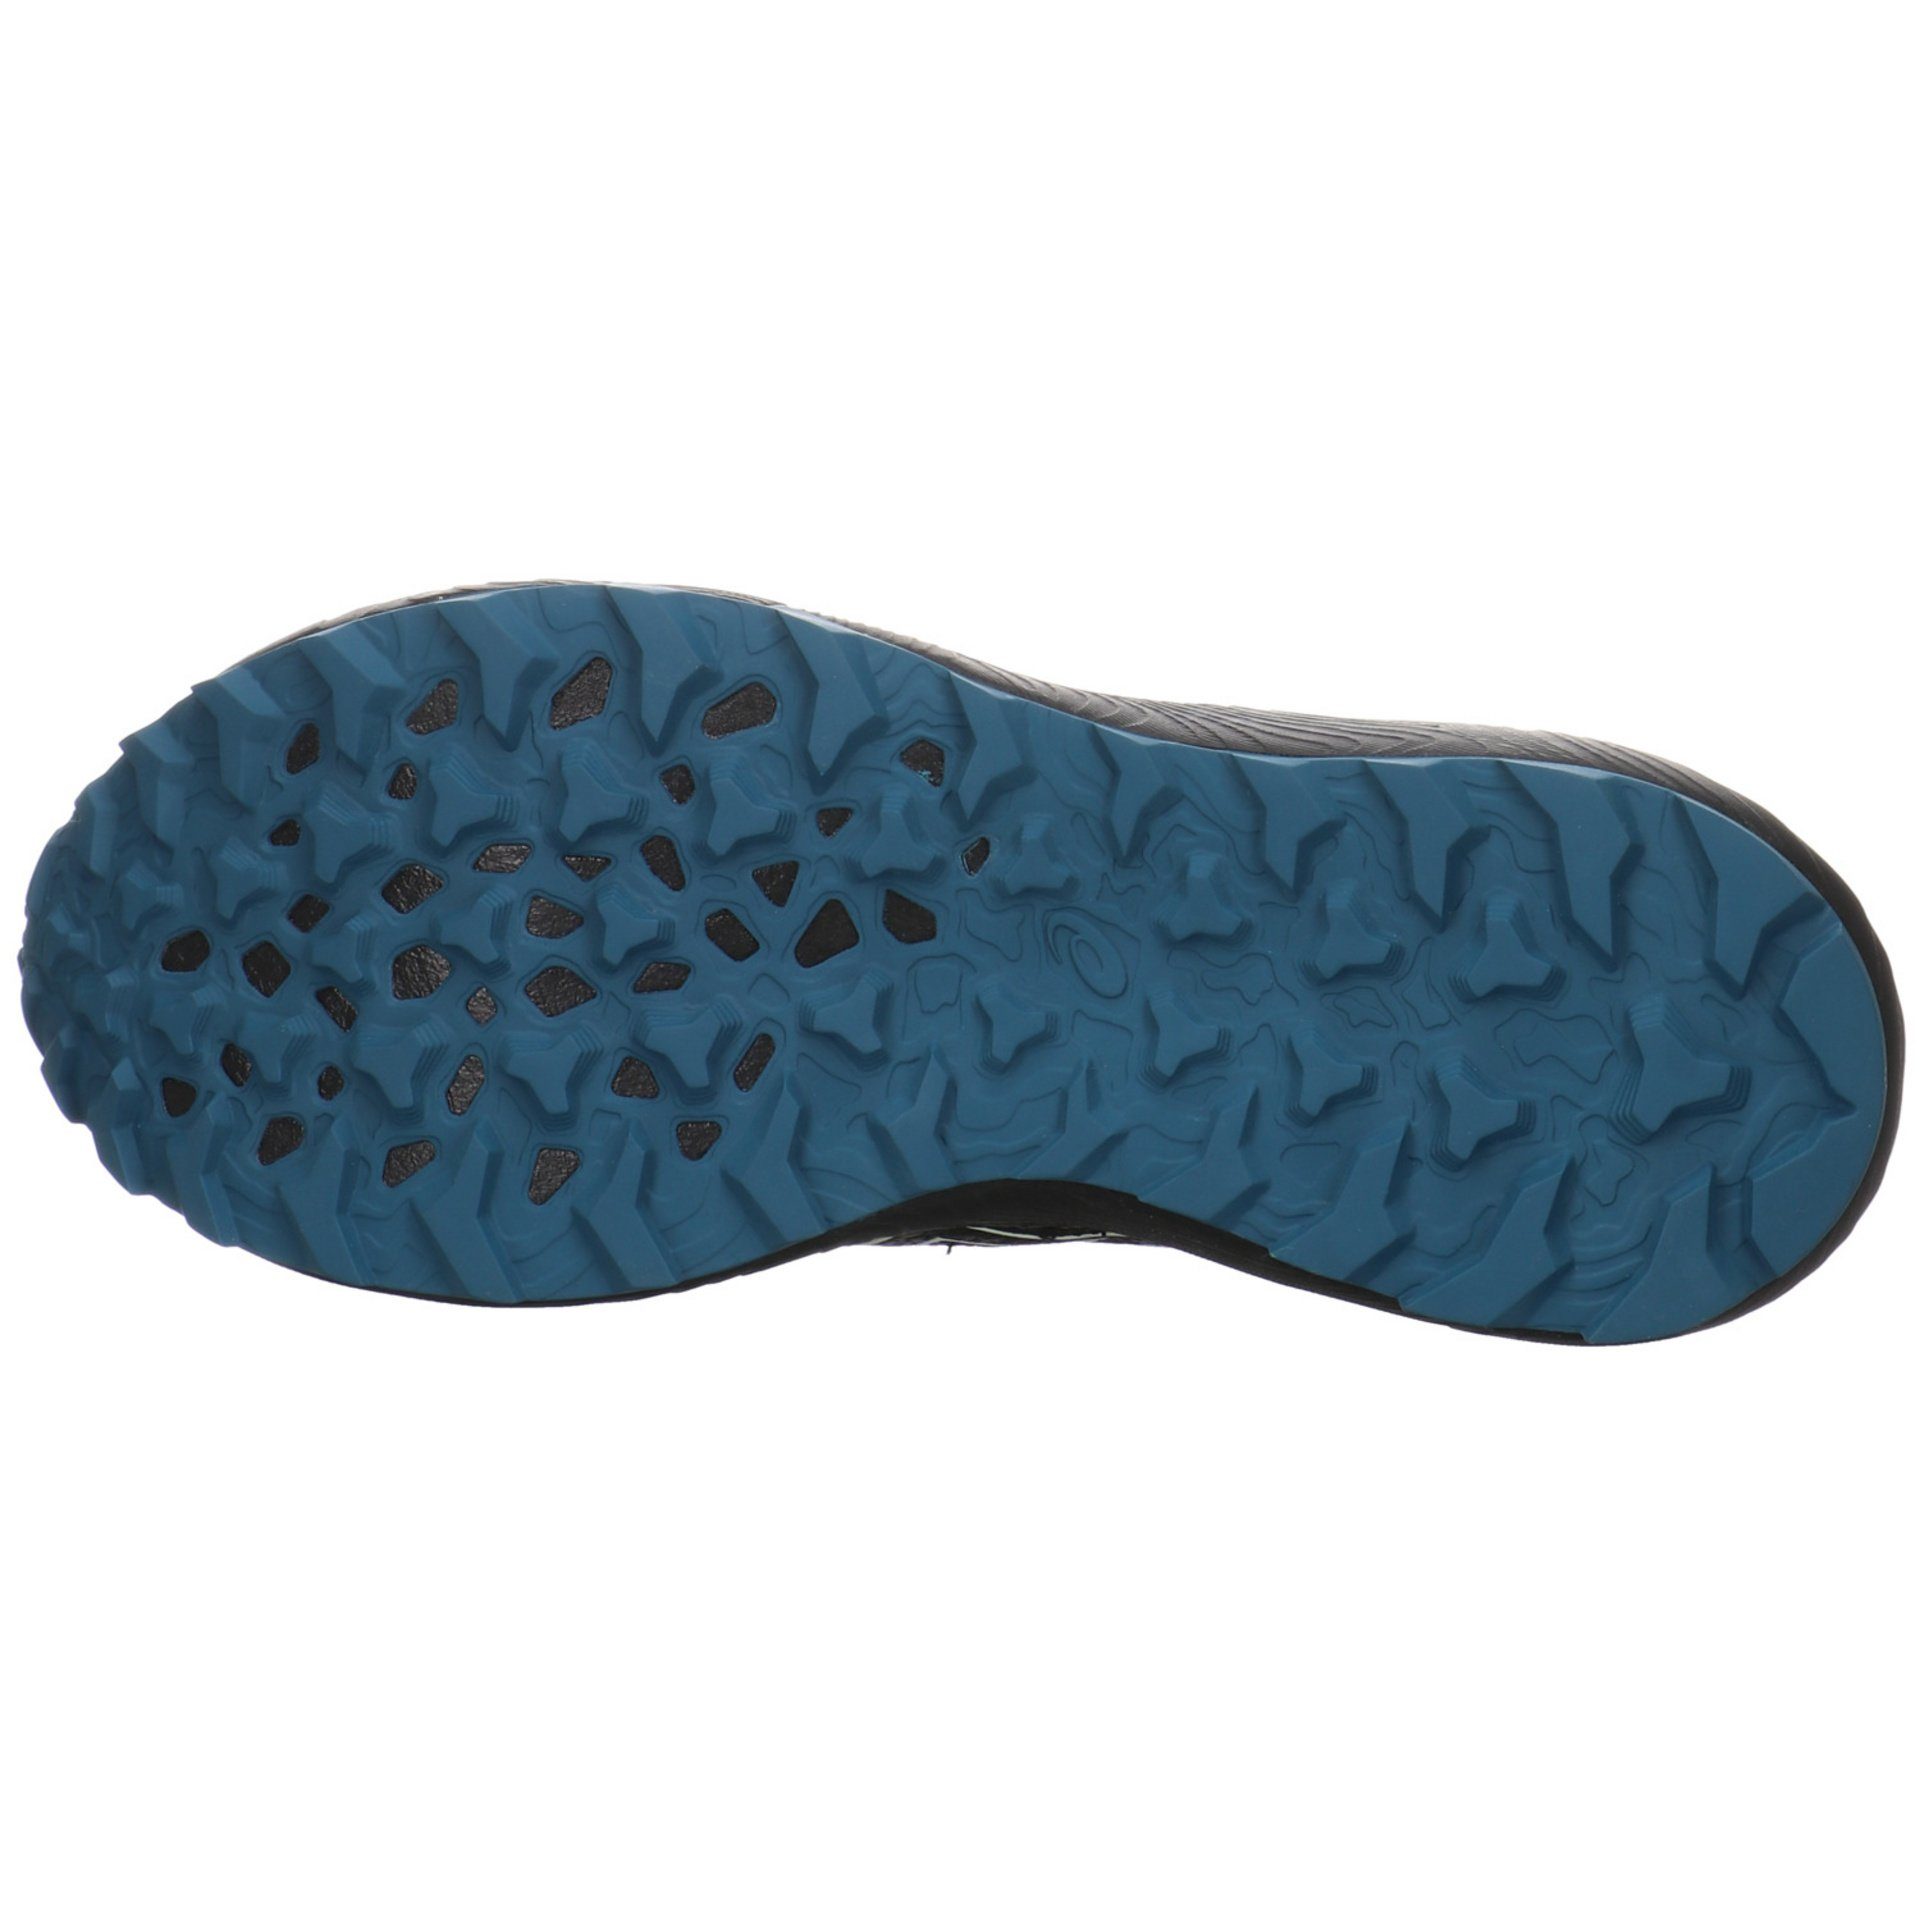 BLACK/INK Outdoorschuh Herren TEAL Outdoor Schuhe Asics Synthetikkombination